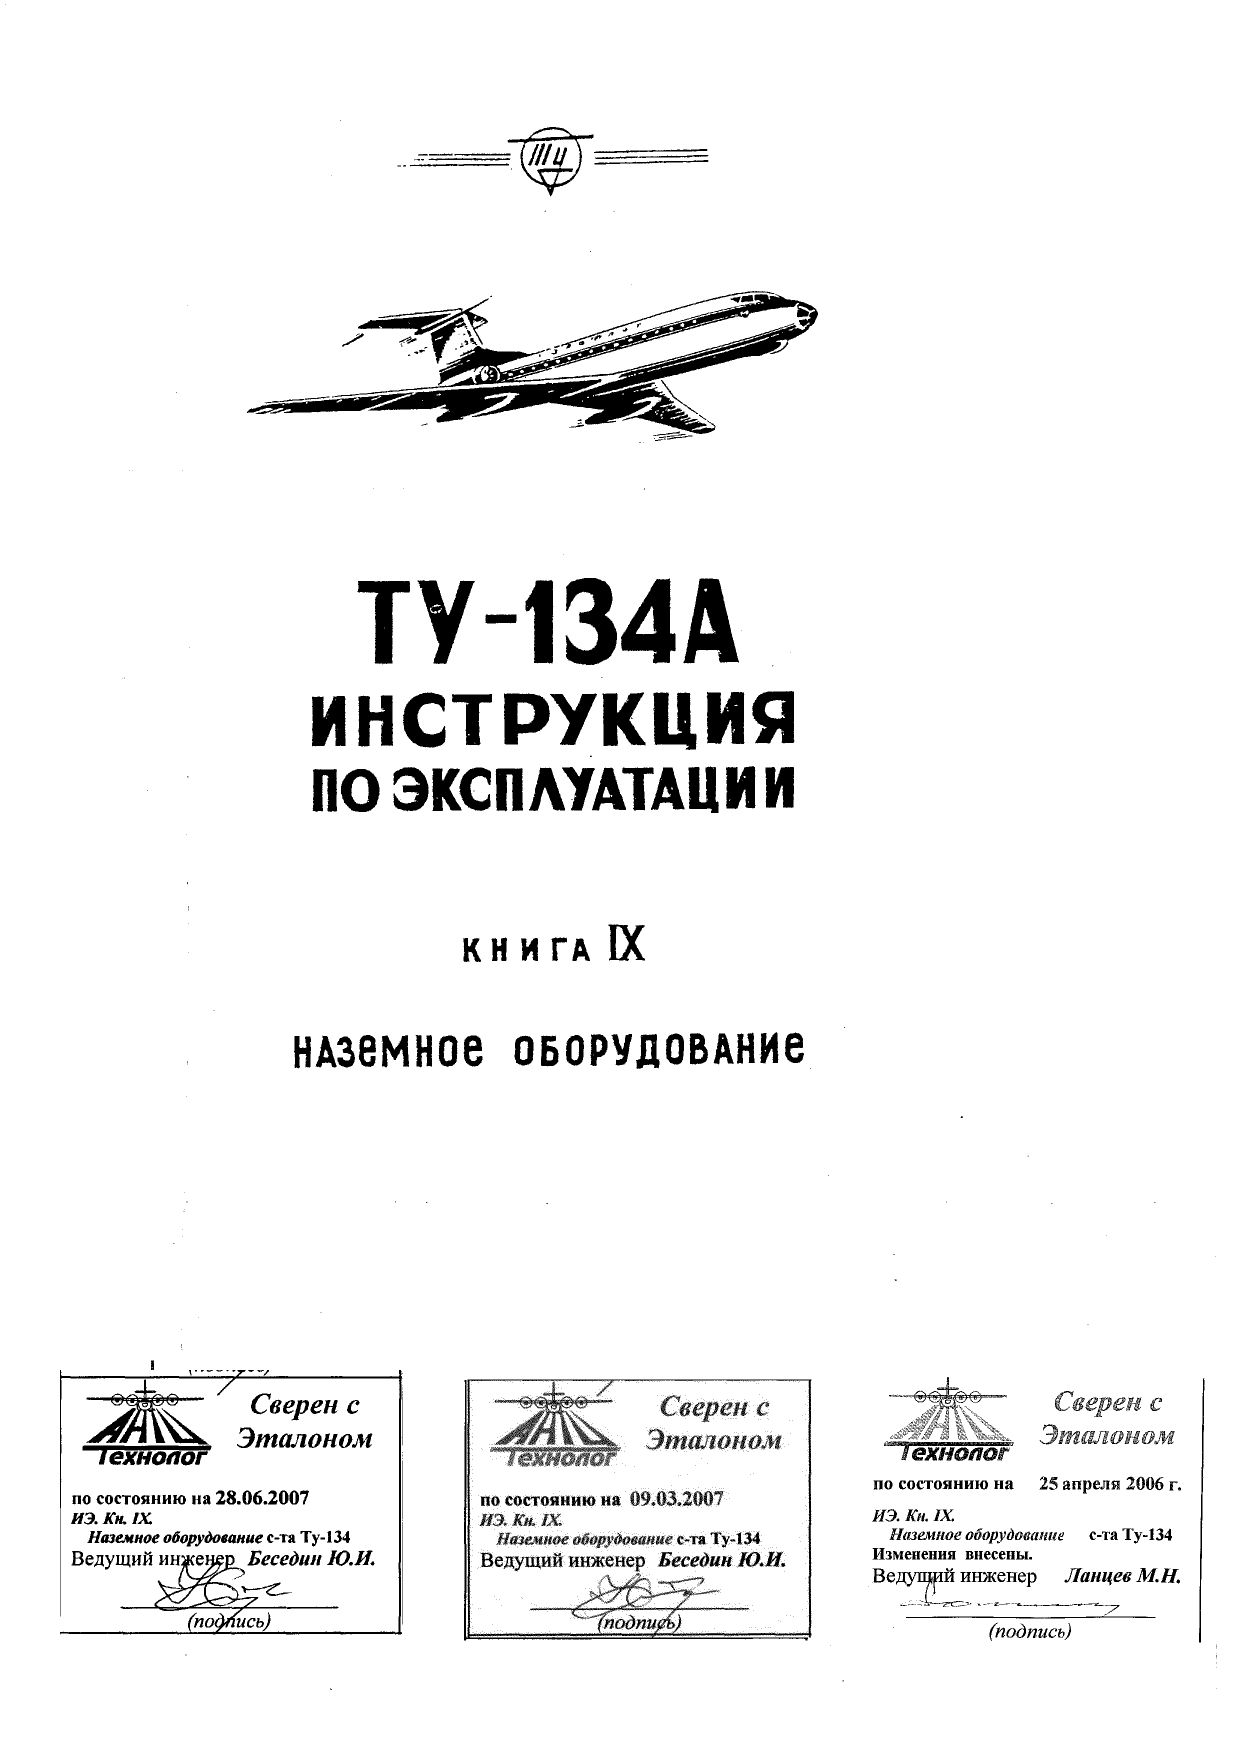 Tu-134_IYE_kn9_002